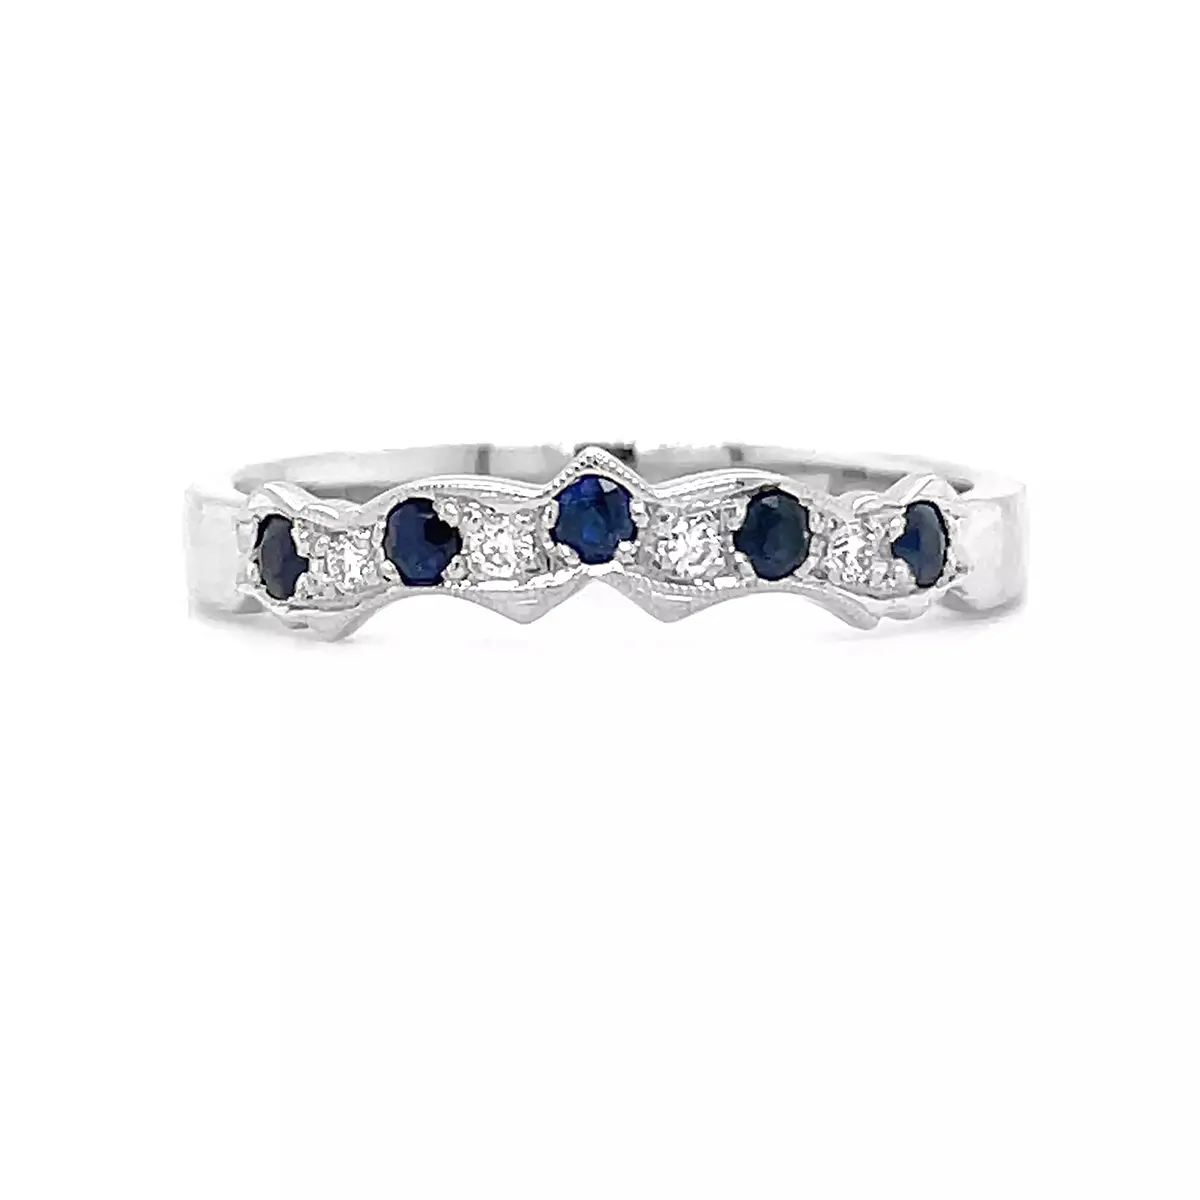 1_1Claddagh Wedding Ring White Gold Sapphire Diamond